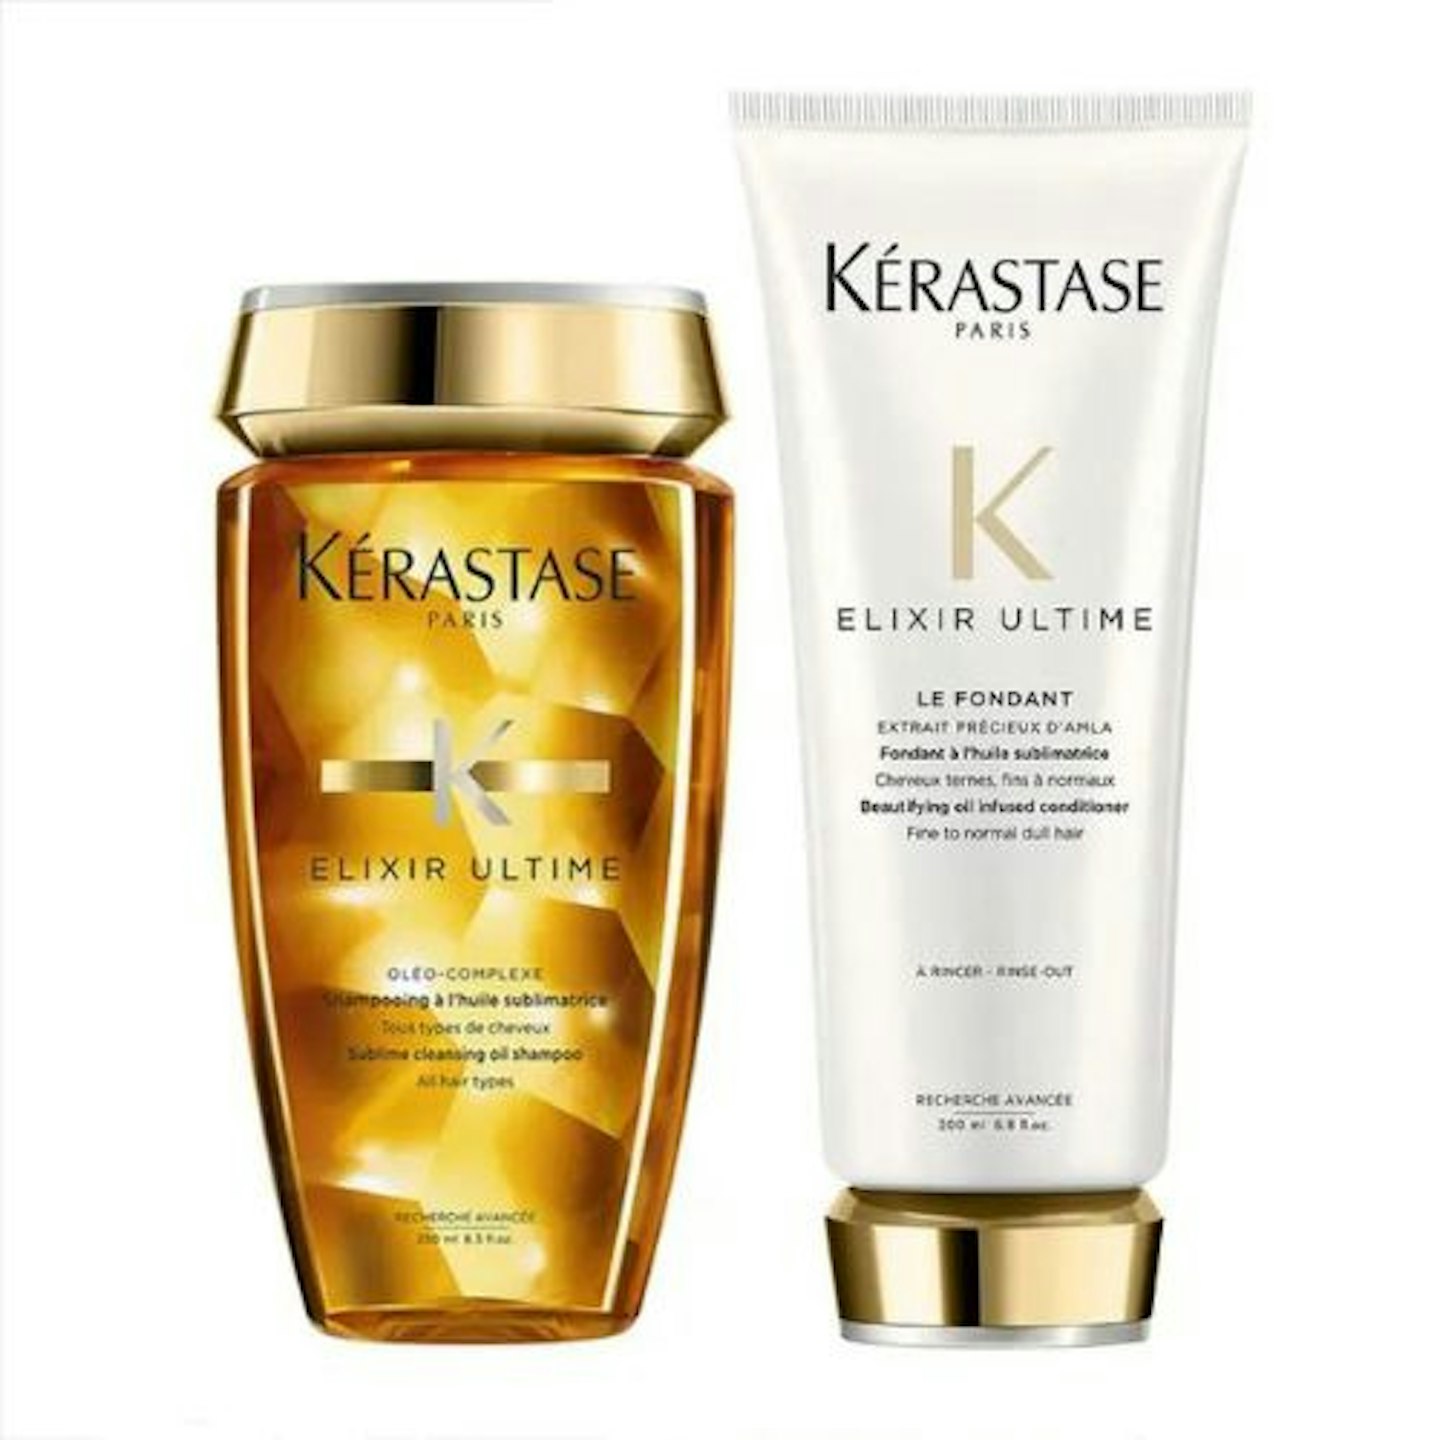 Kérastase Elixir Ultime Shampoo and Conditioner Duo 